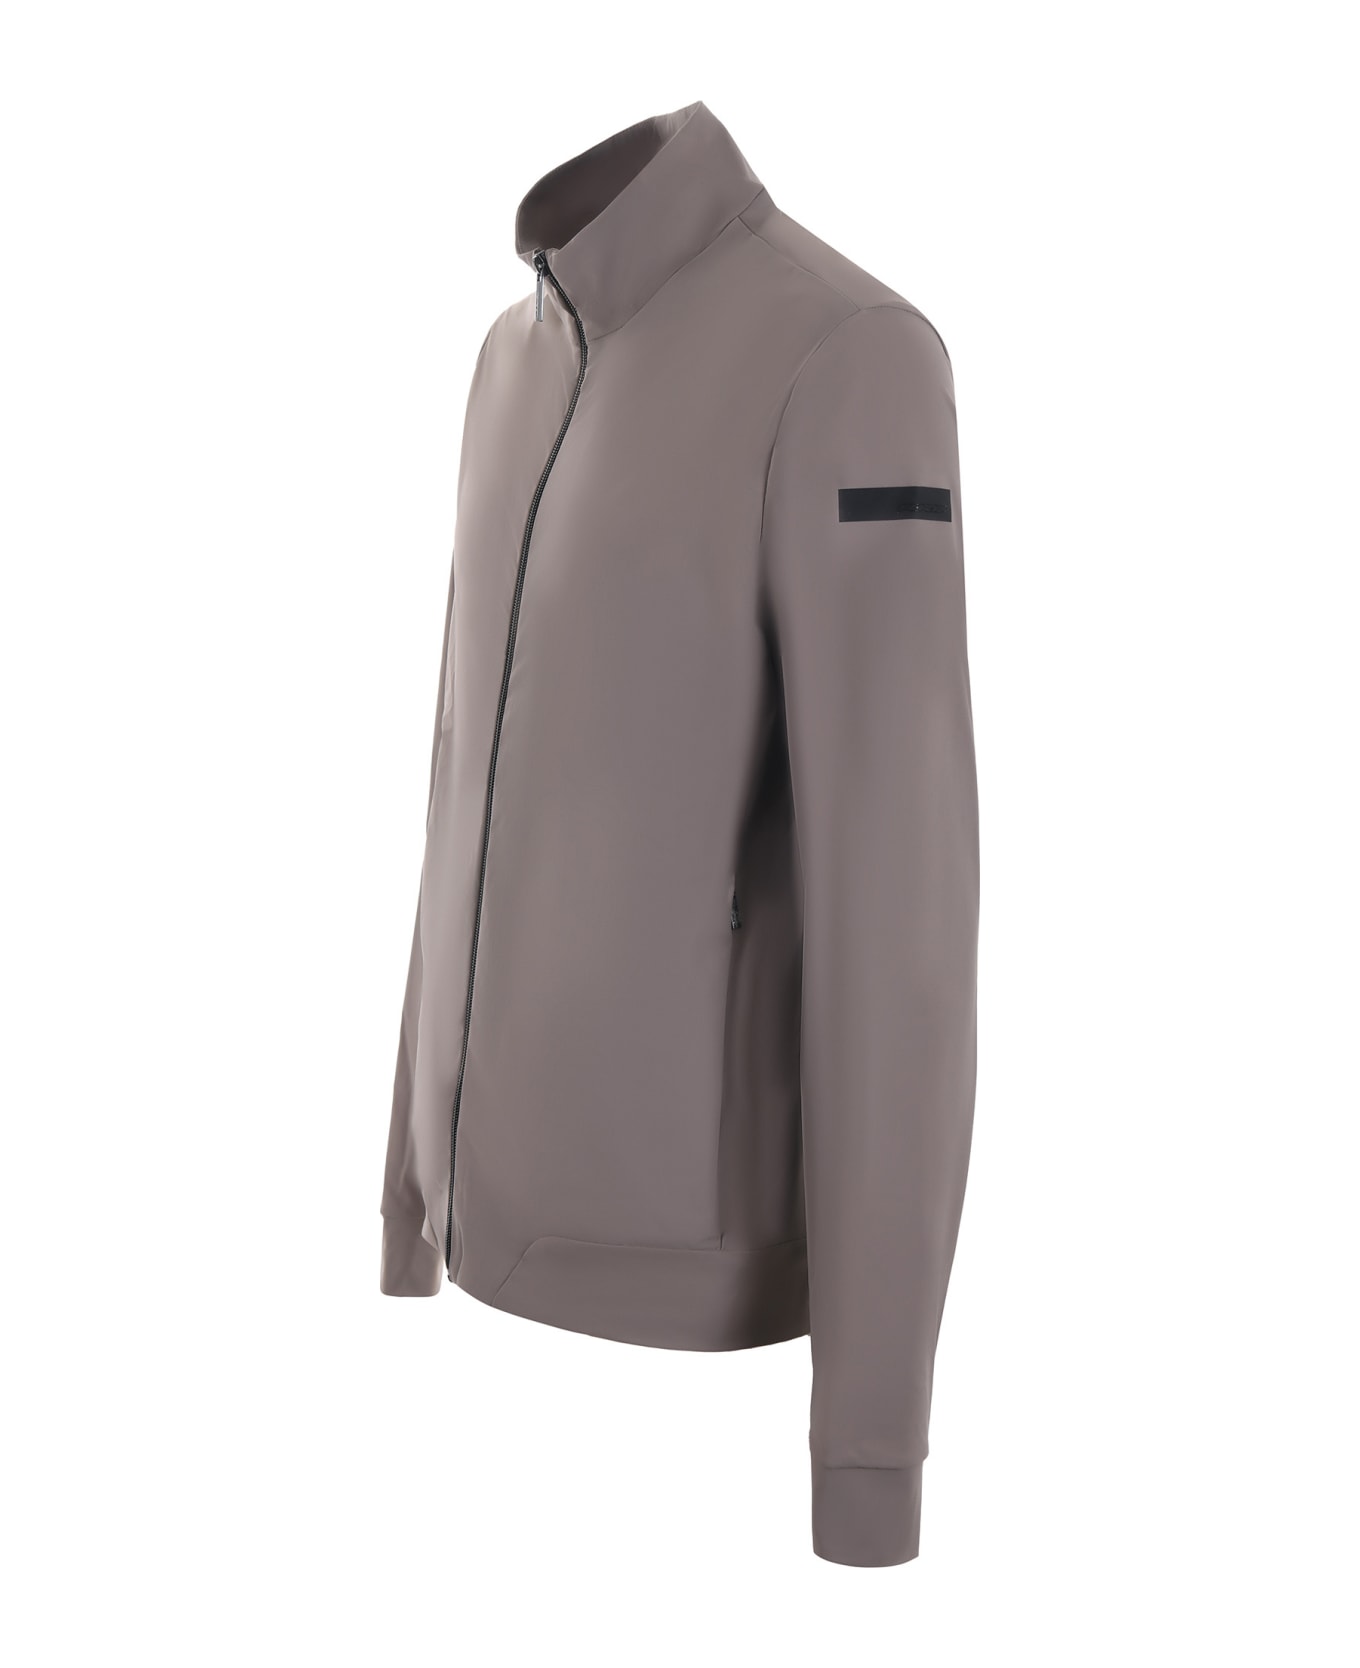 RRD - Roberto Ricci Design Beige Turtleneck Sweatshirt - Tortora